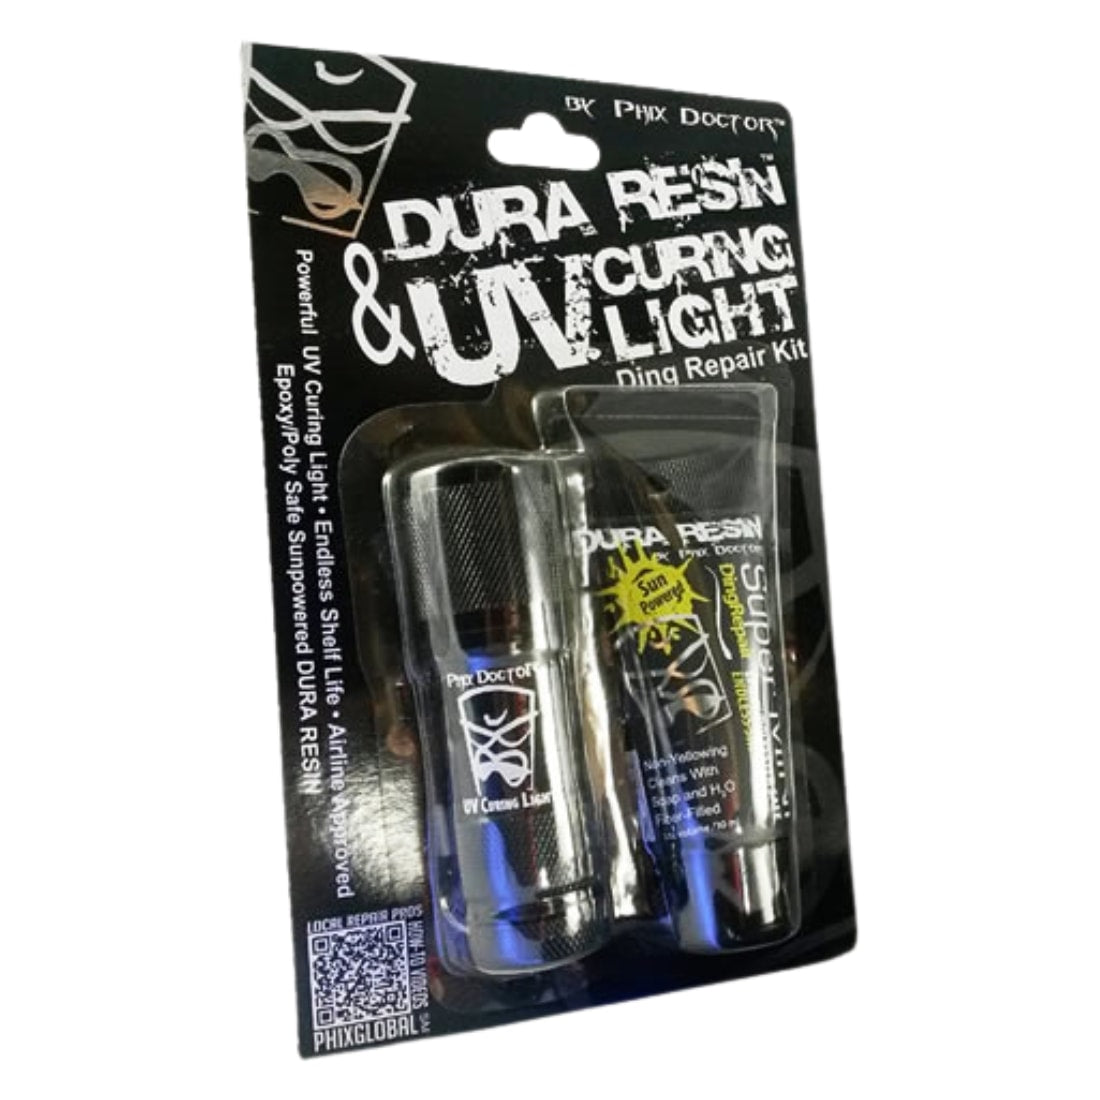 Phix Doctor Dura Resin & Uv Curing Light Ding Repair Kit - Clear - Epoxy Resin Surfboard Repair by Phix Doctor 1fl oz / 29.5ml